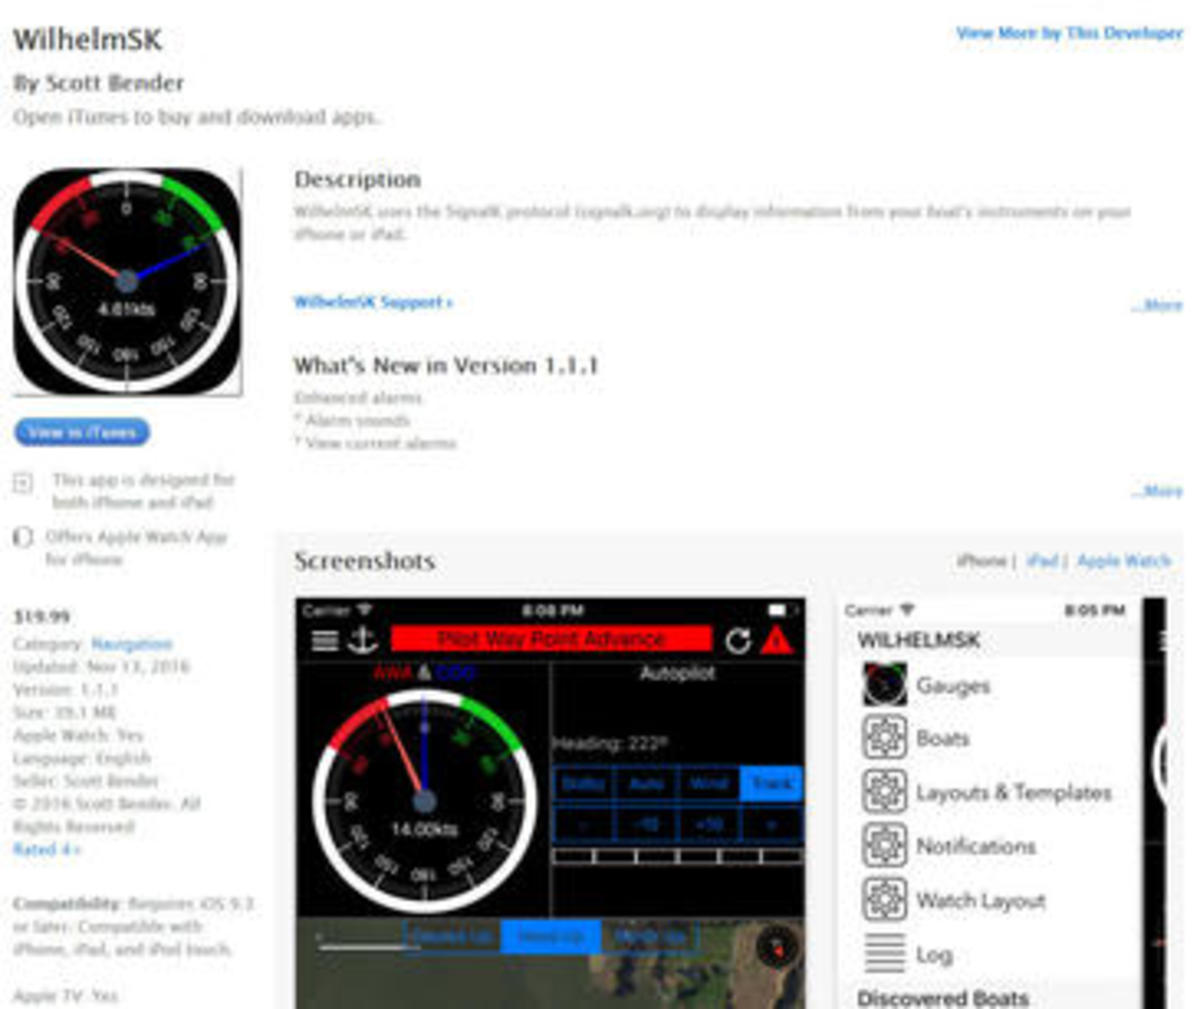 WilhelmSK_at_Apple_iTunes_preview_aPanbo.jpg